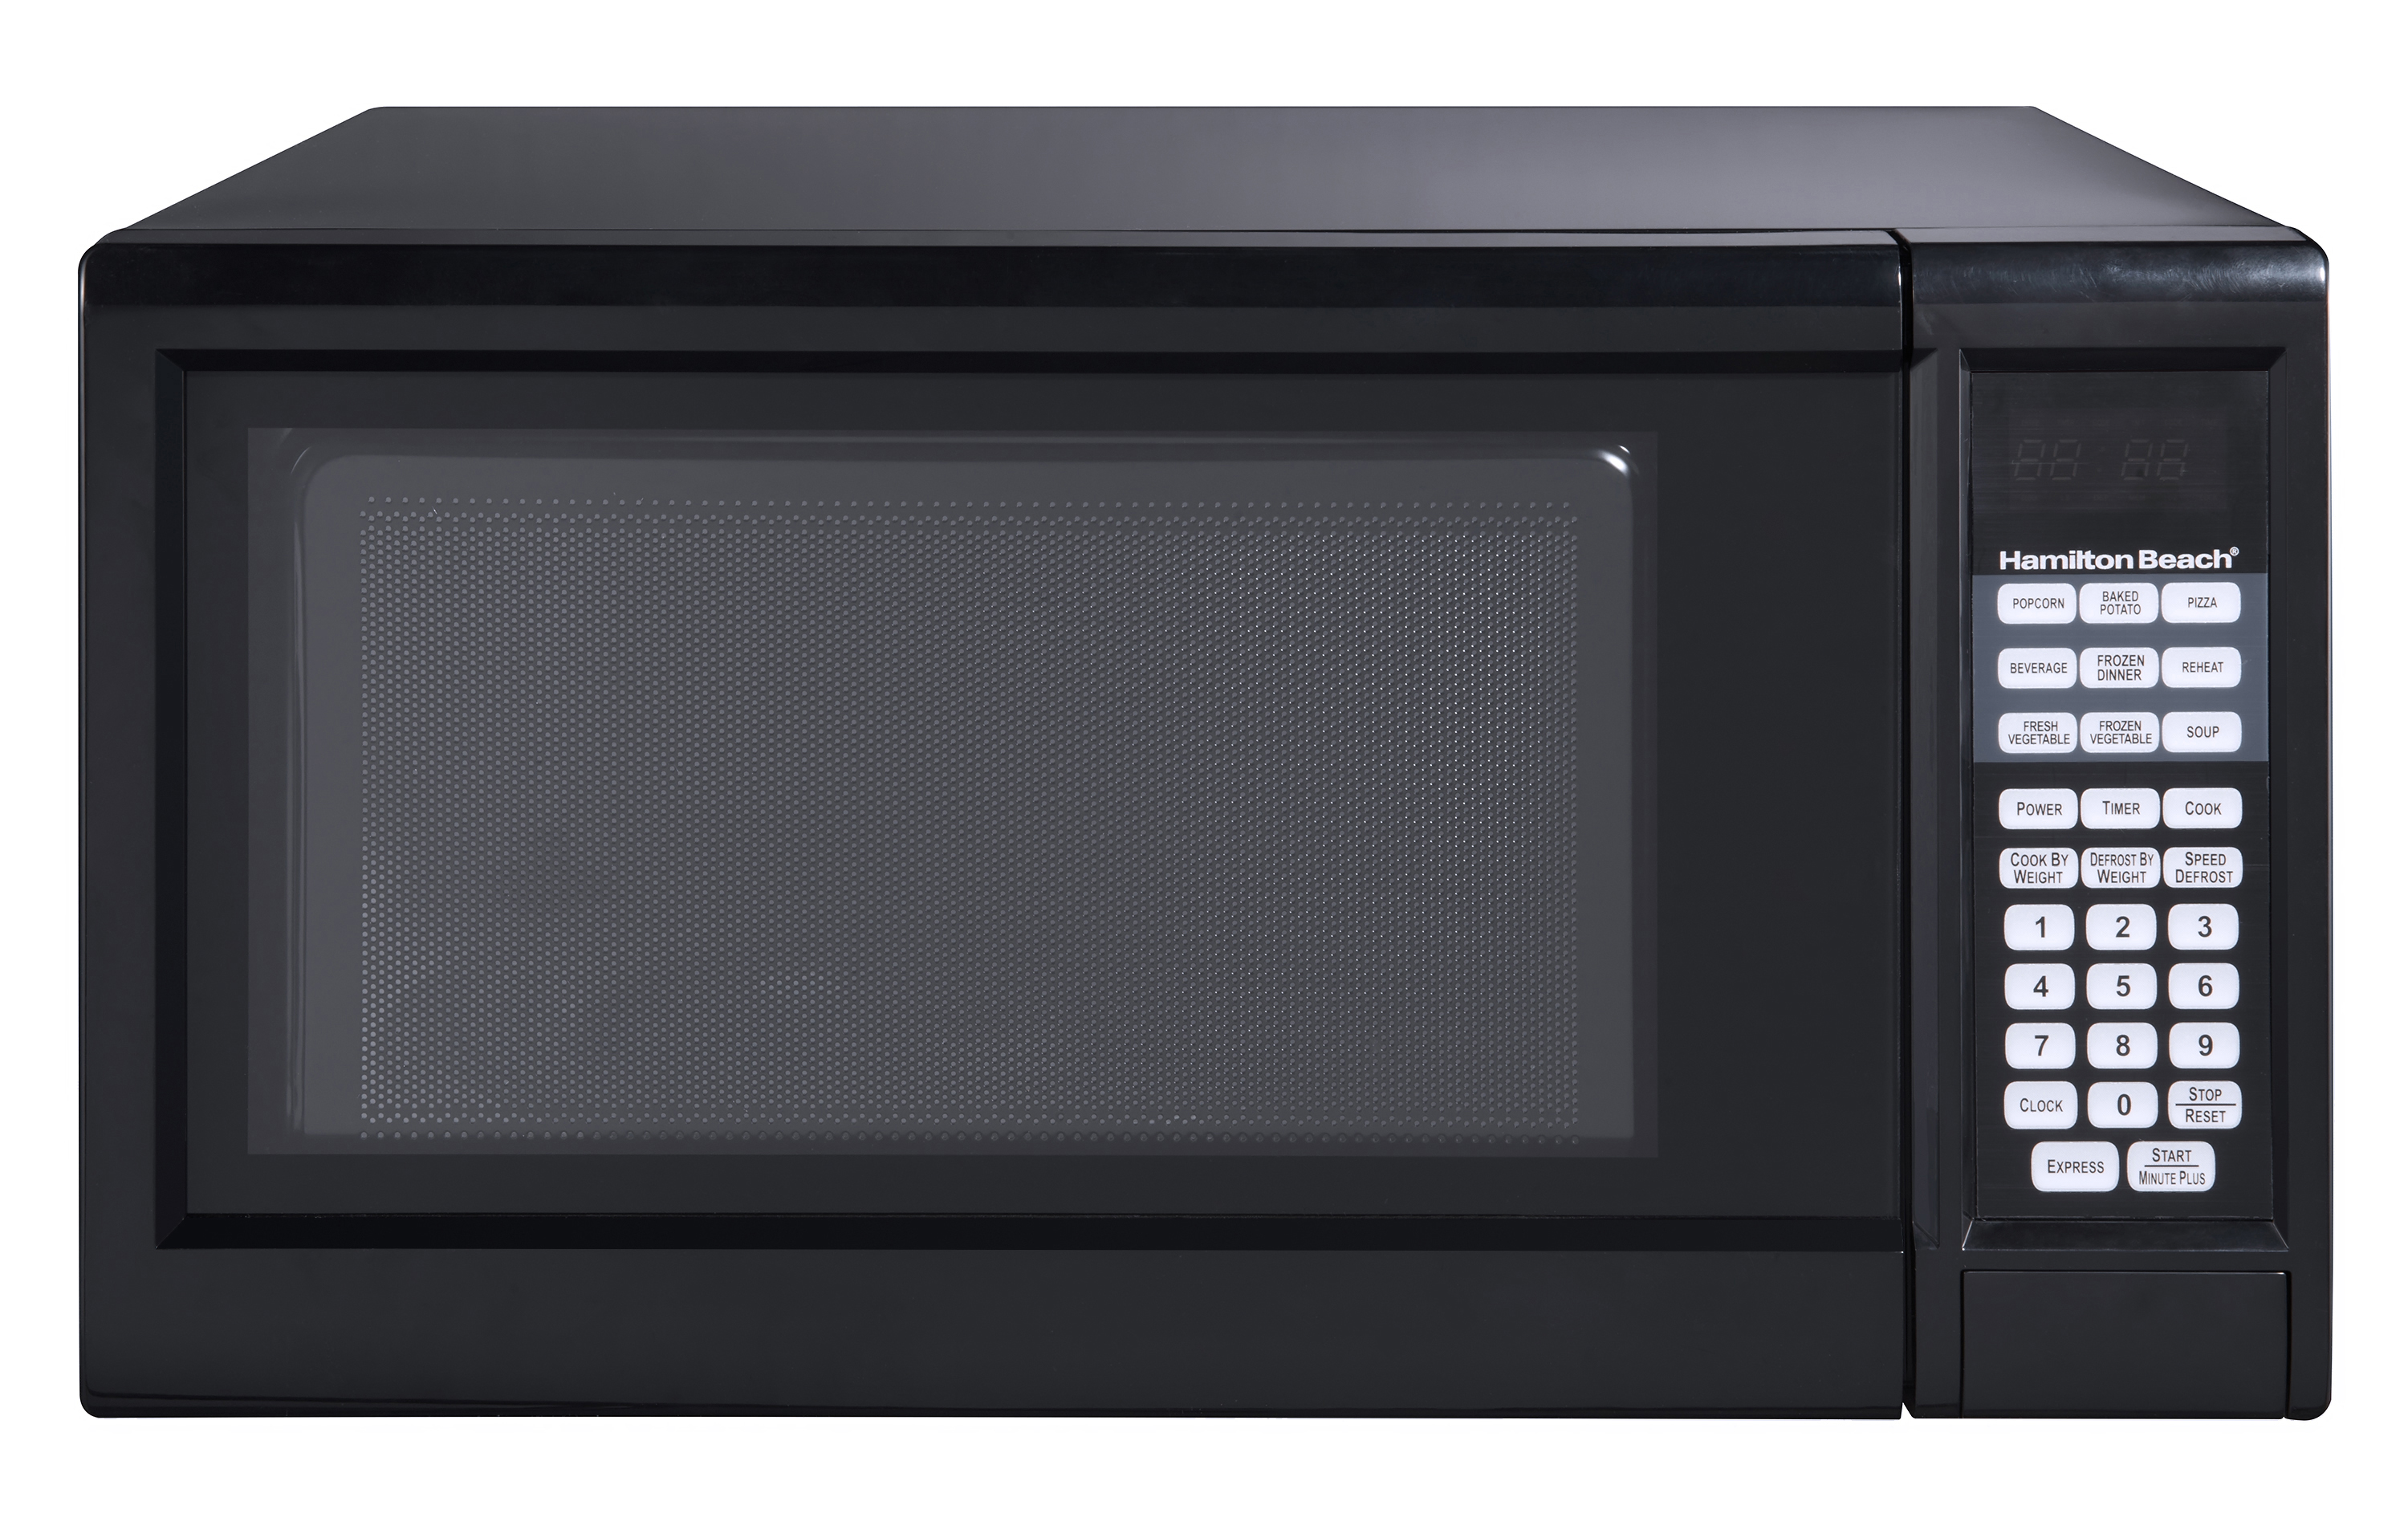 Hamilton Beach 1.3 Cu ft Digital Microwave Oven, Black - image 1 of 6